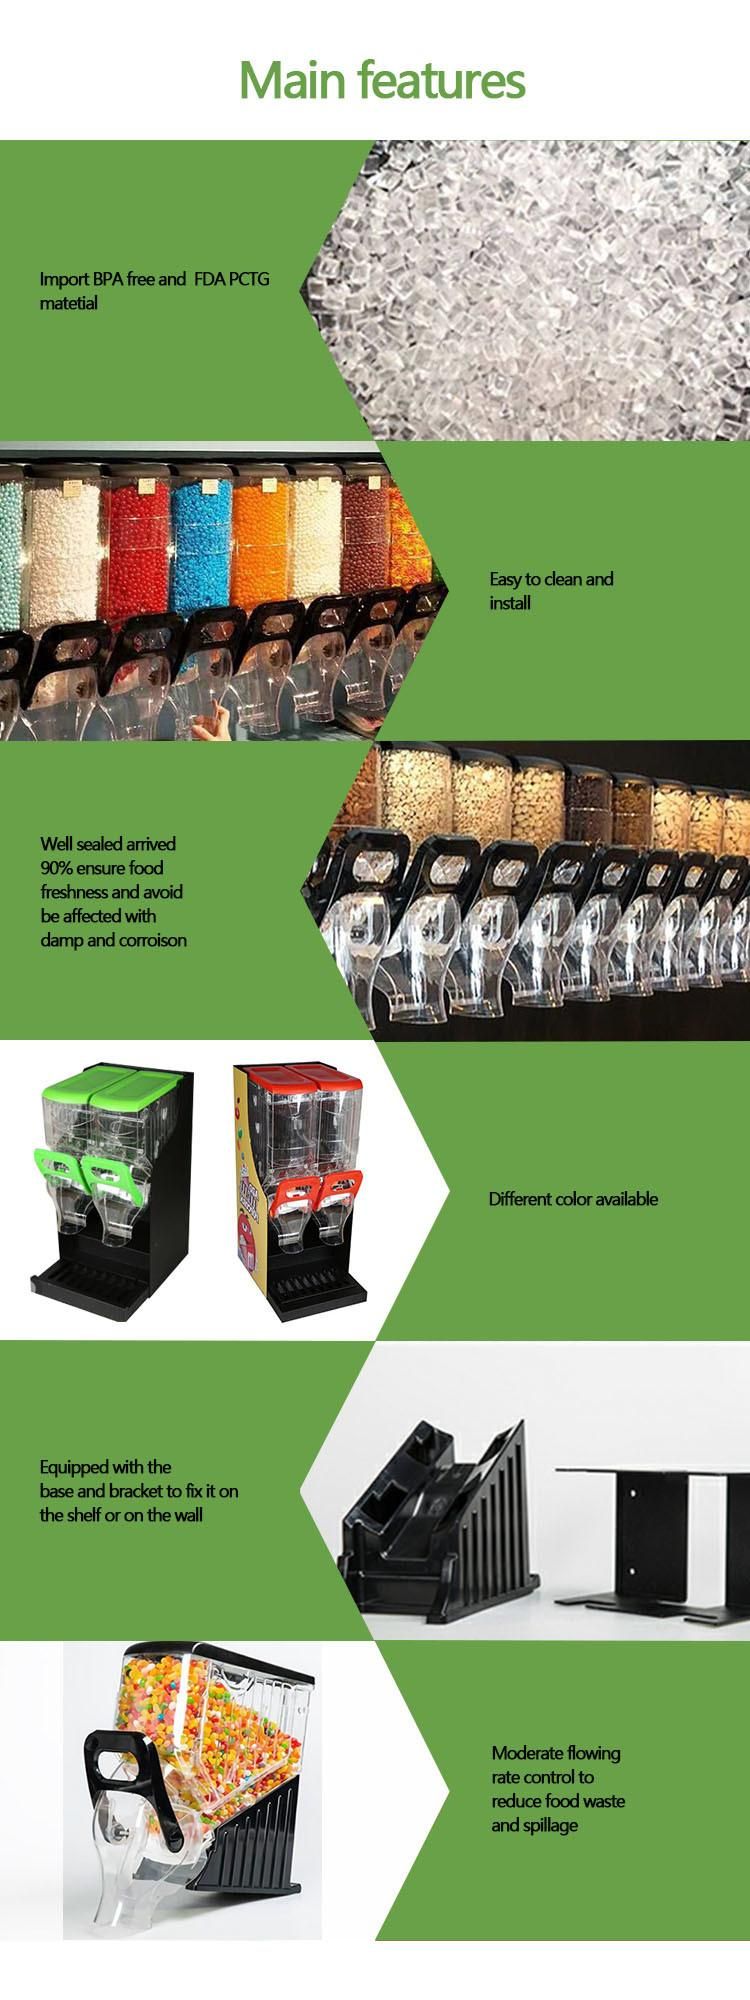 Hot Selling Plastic Bulk Food Dispenser Food Display Containers